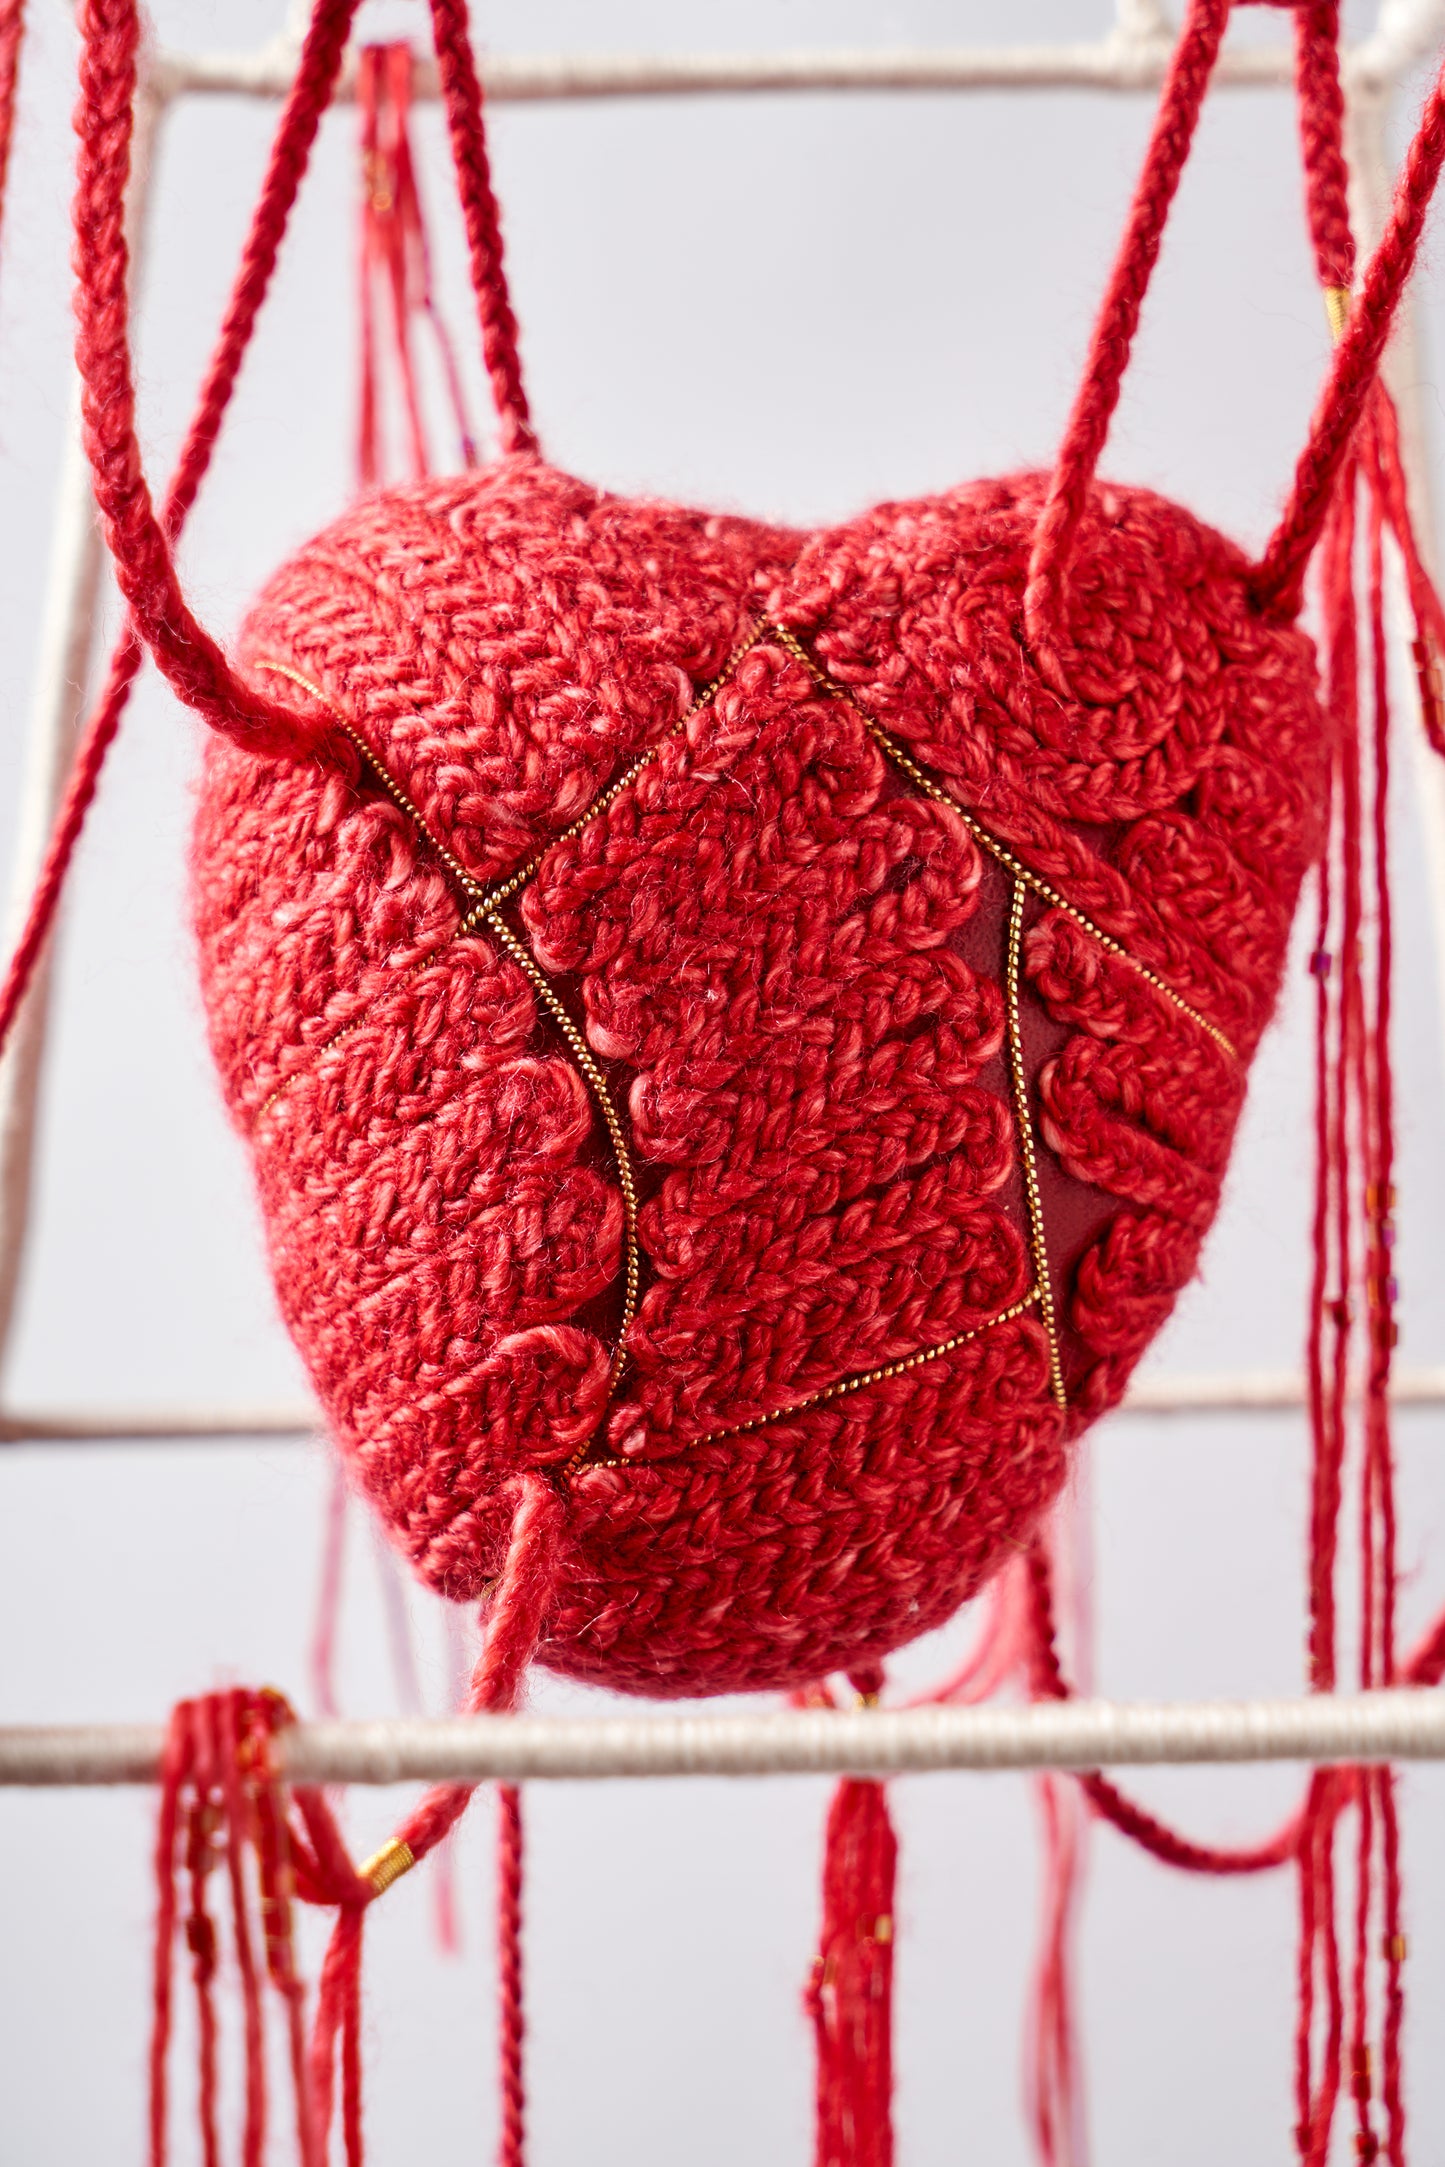 The Heart-Shaped Box par Cinthya Chalifoux